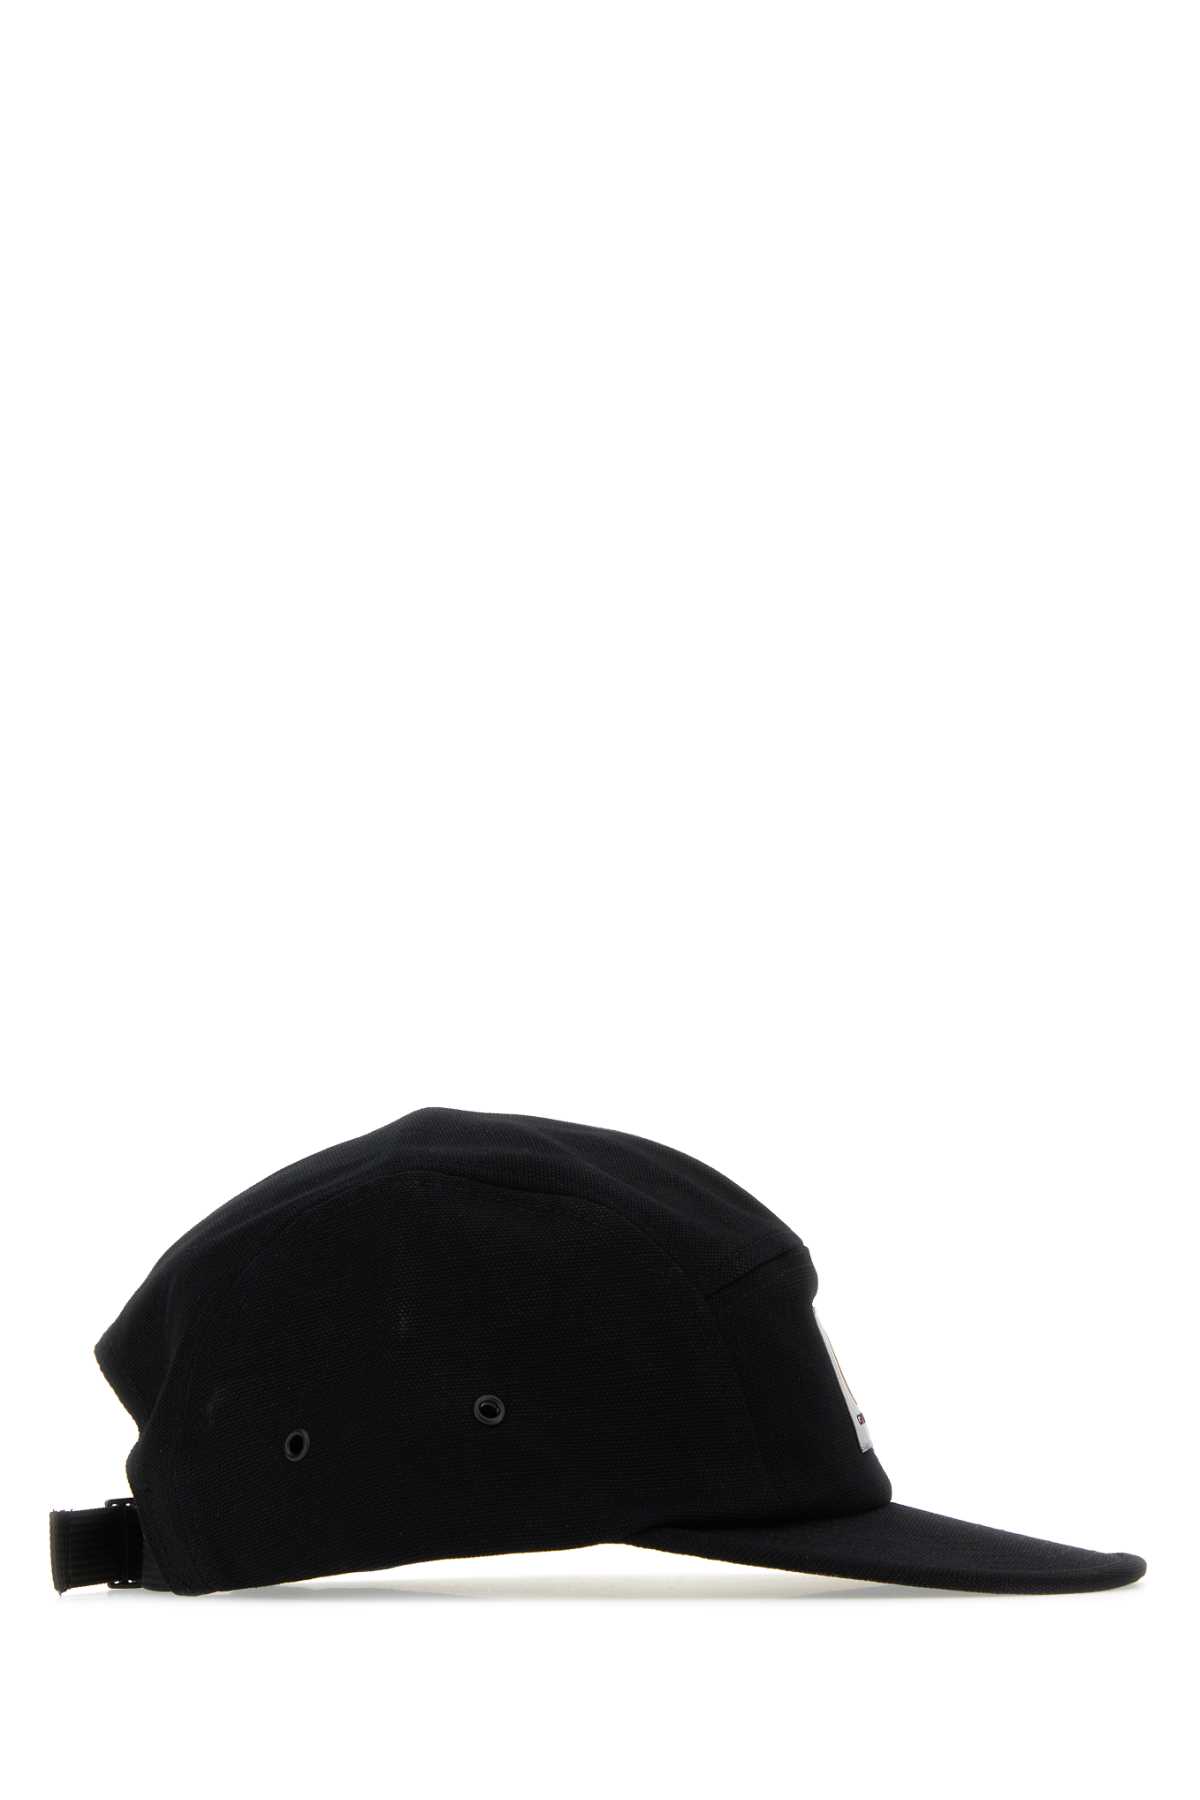 CARHARTT BLACK COTTON BACKLEY CAP